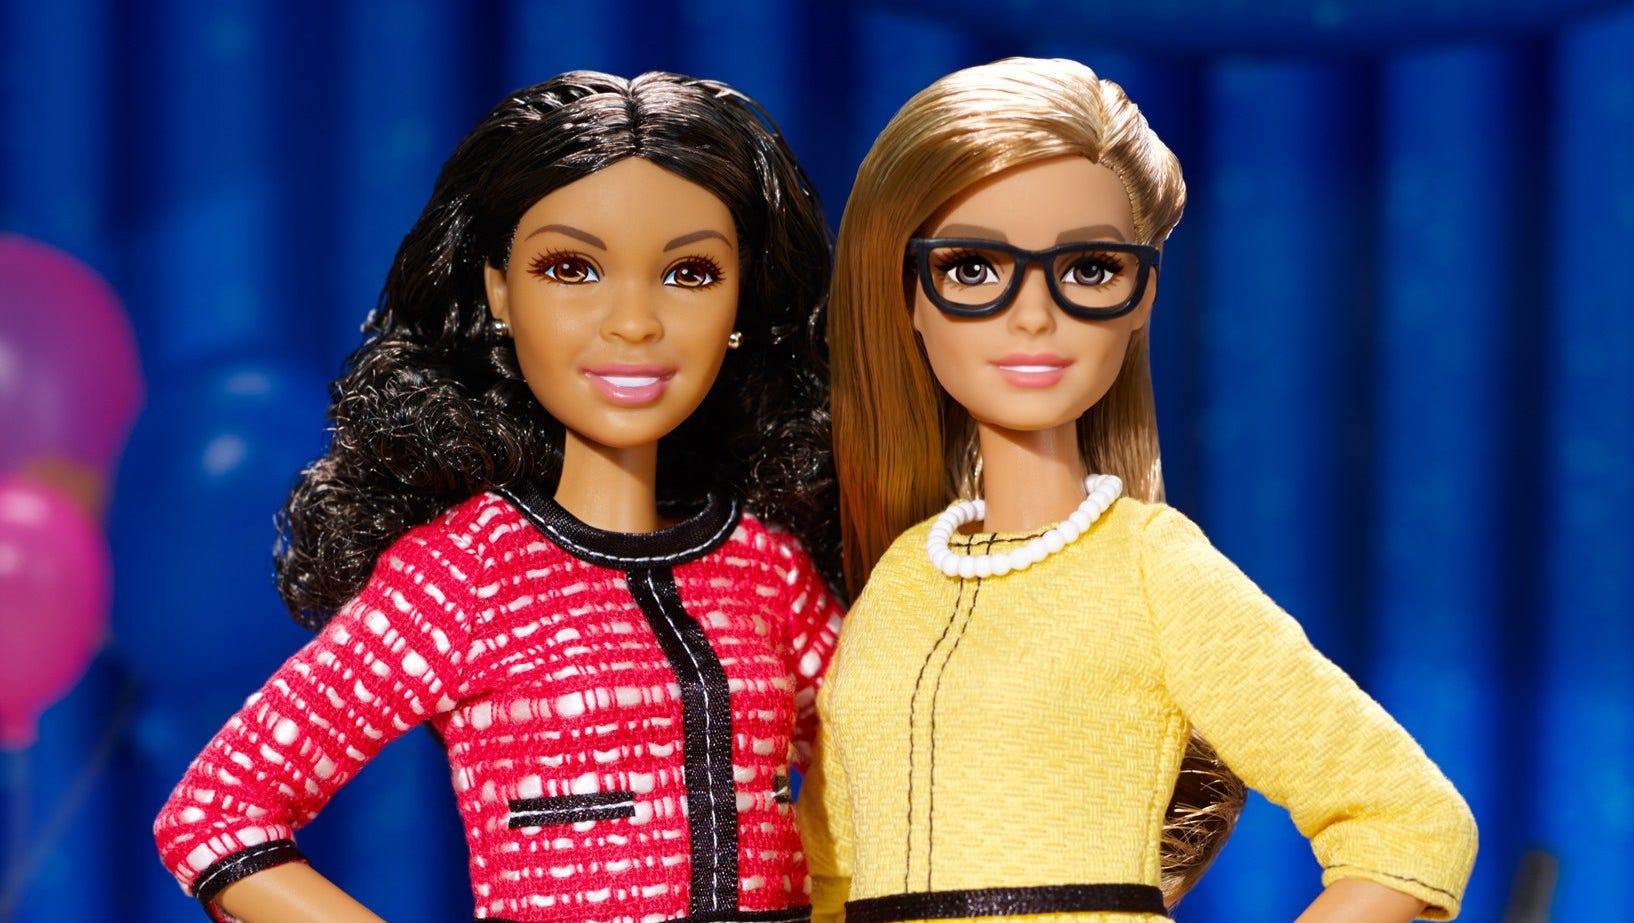 New Presidential Barbie Has Running Mate Too